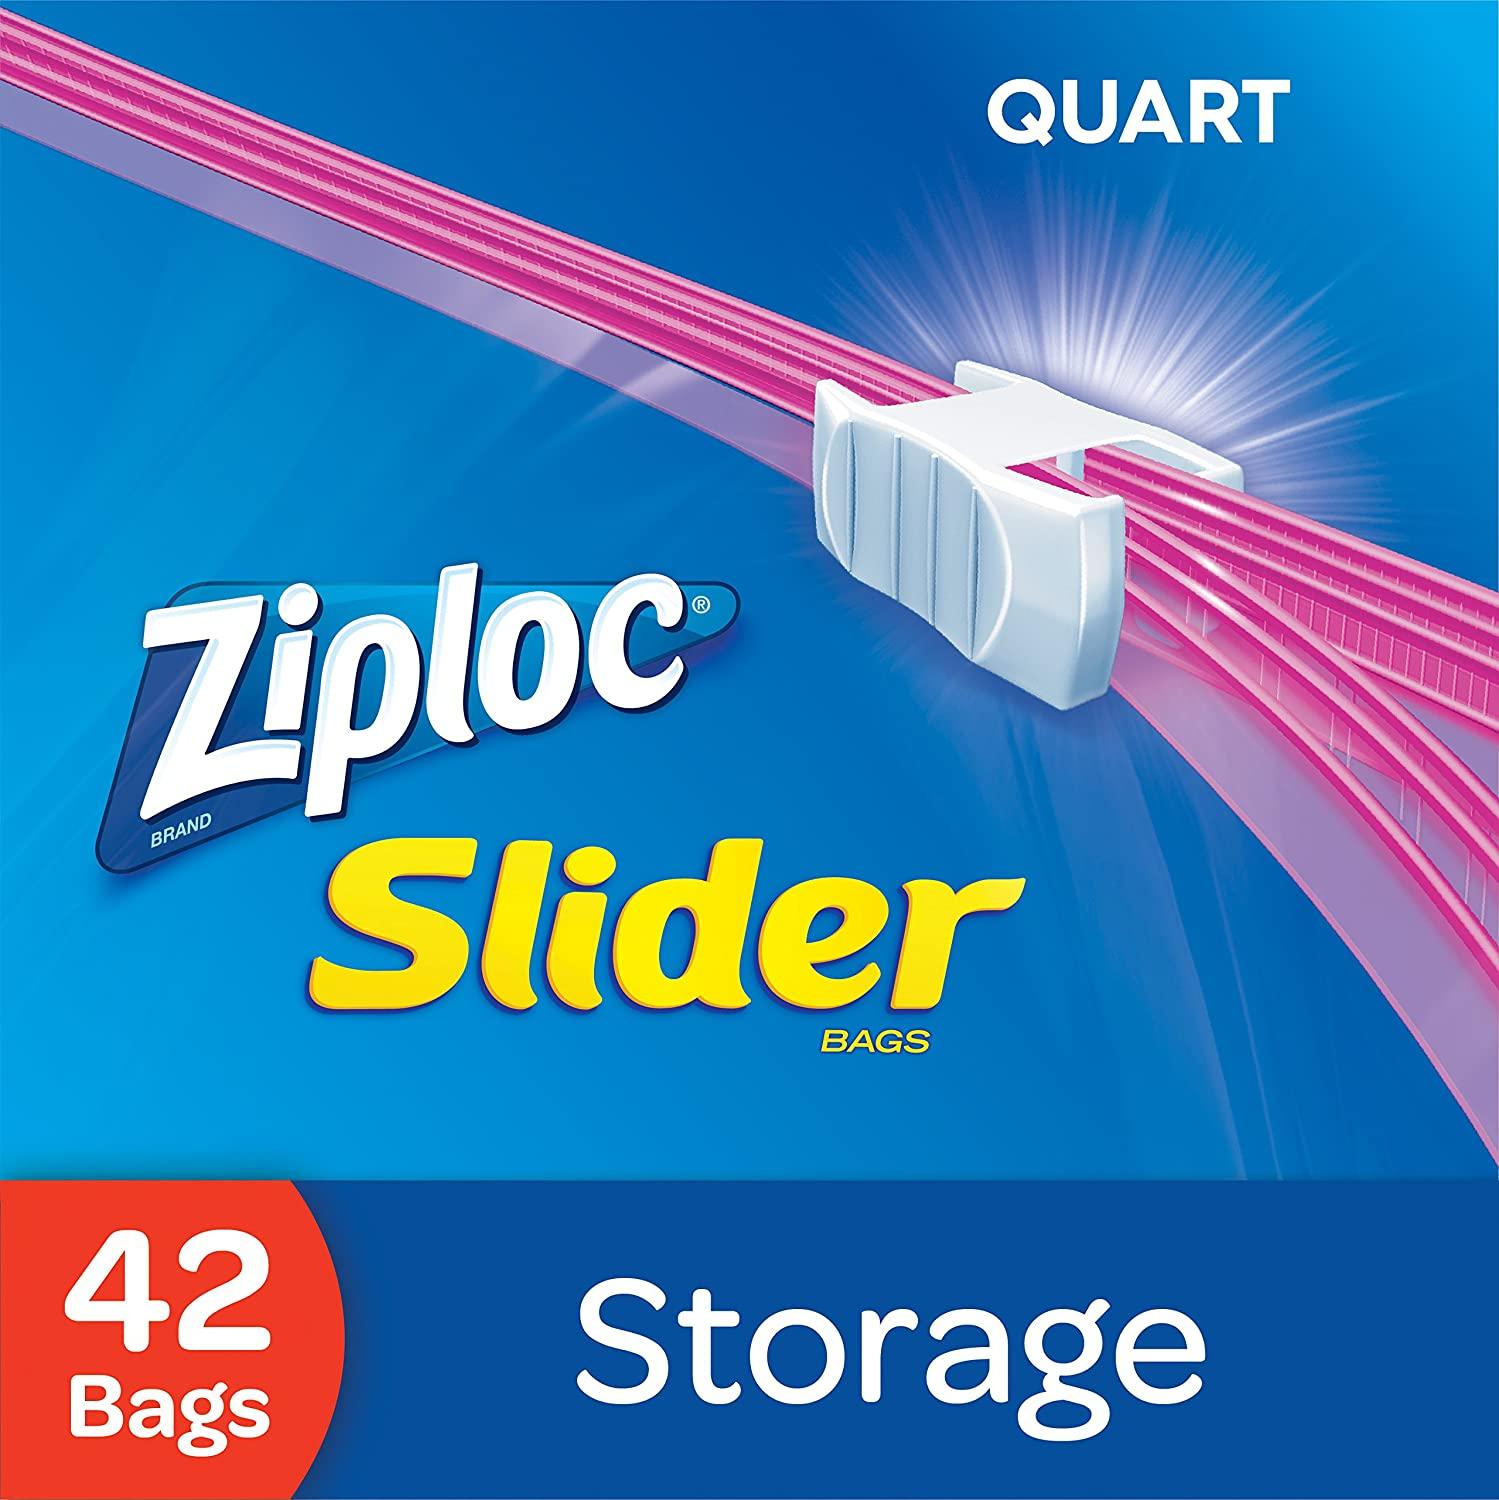 Ziploc Slider Storage Bags with Power Shield Technology